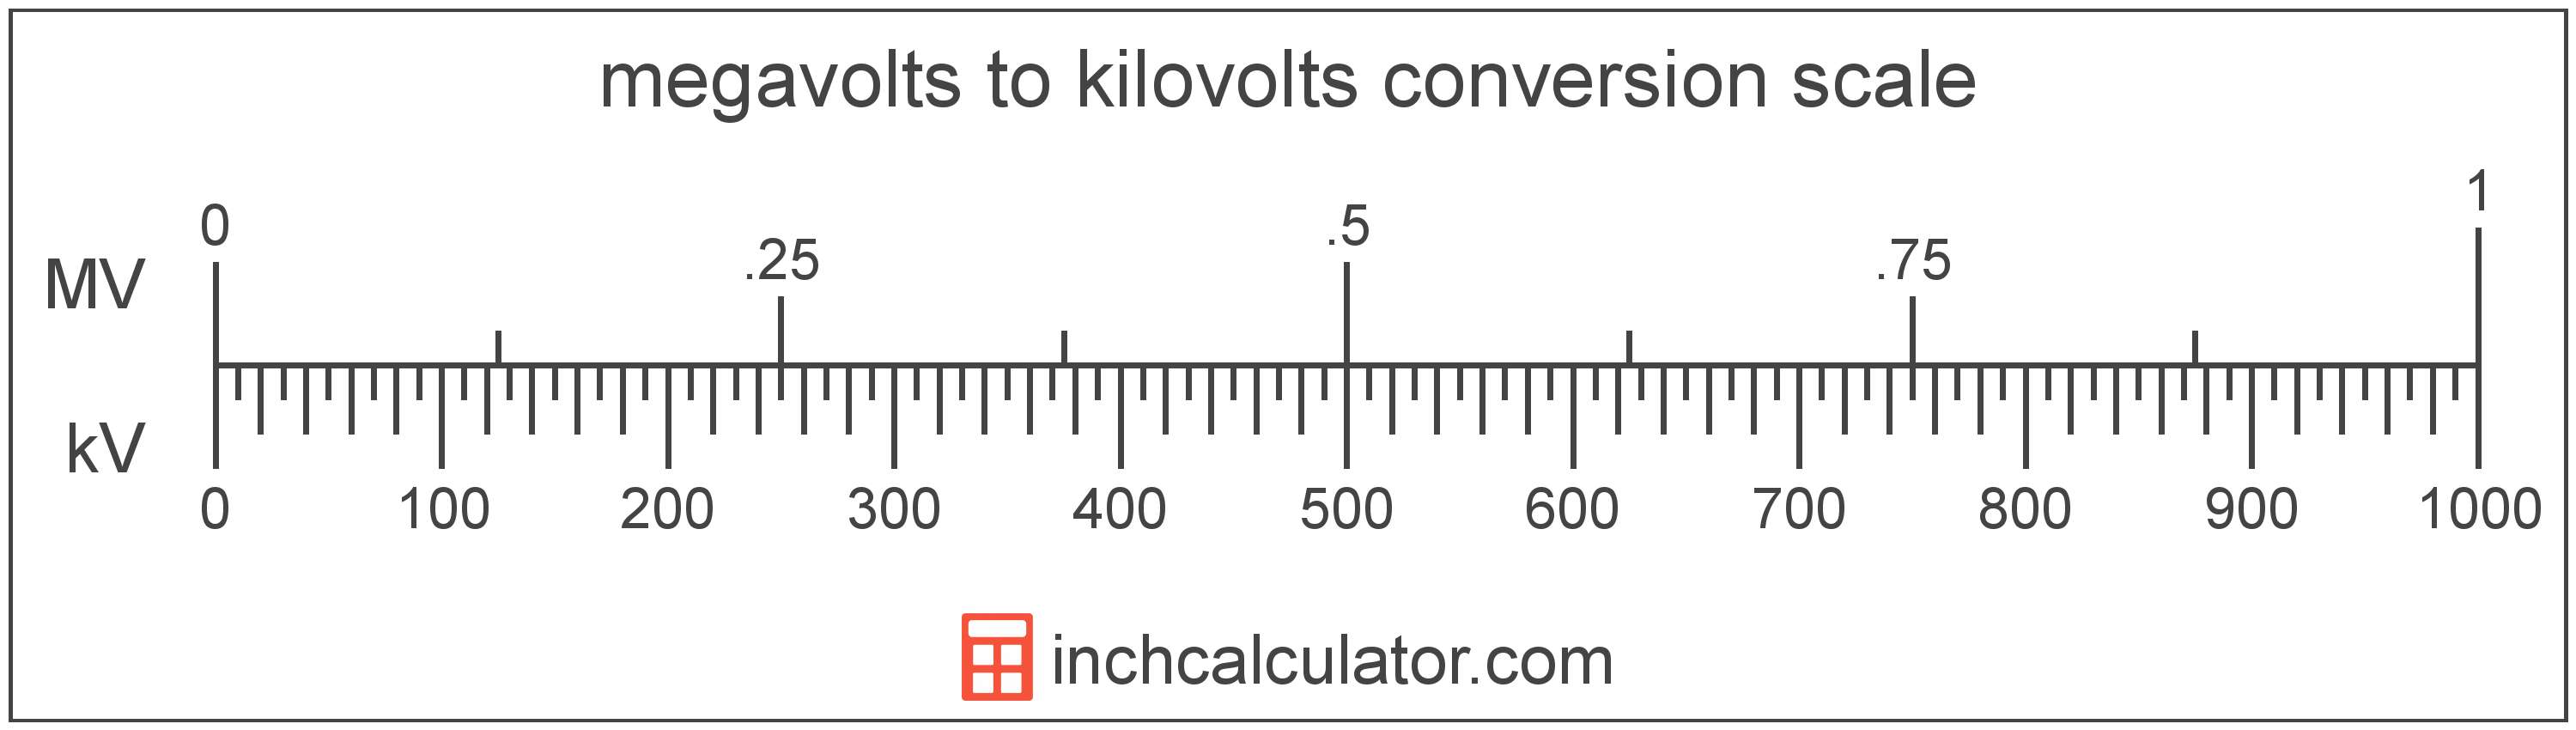 conversion scale showing megavolts and equivalent kilovolts voltage values